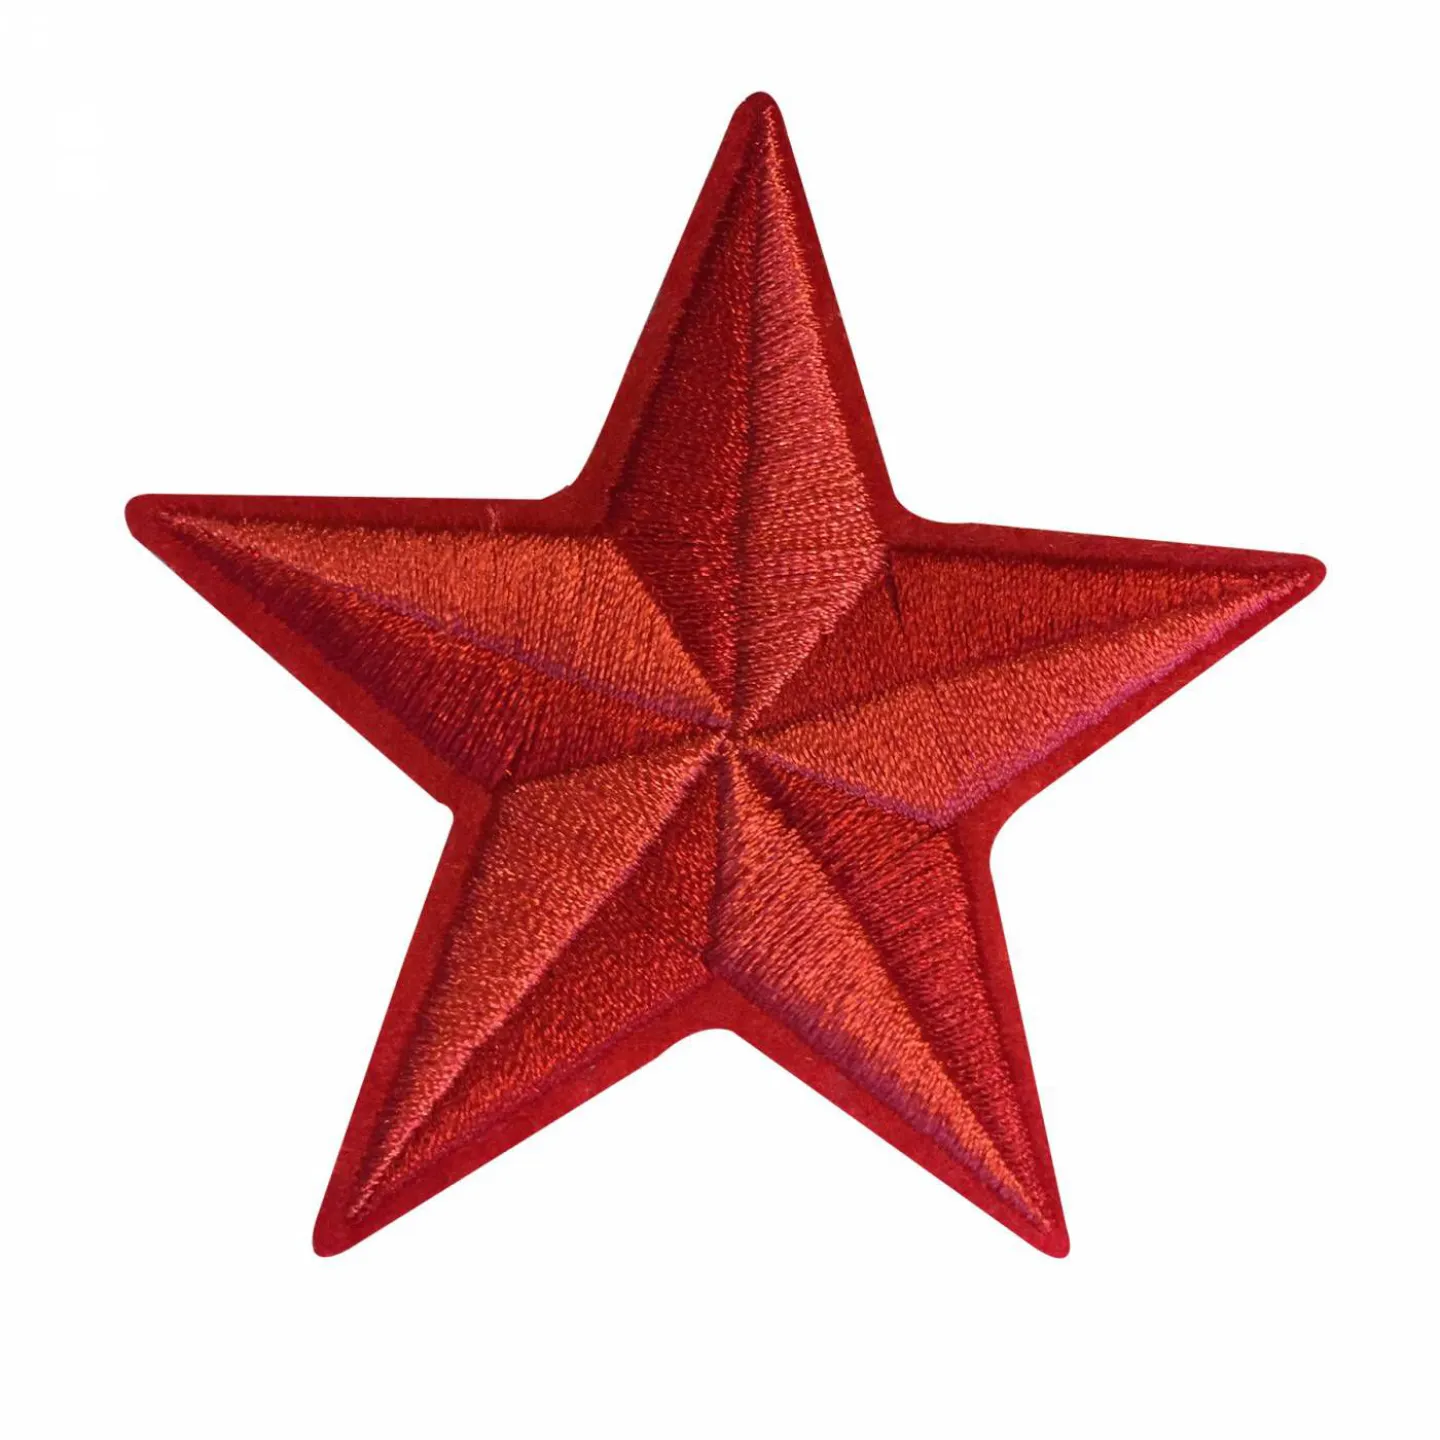 Kielegat embleem - Rode ster.